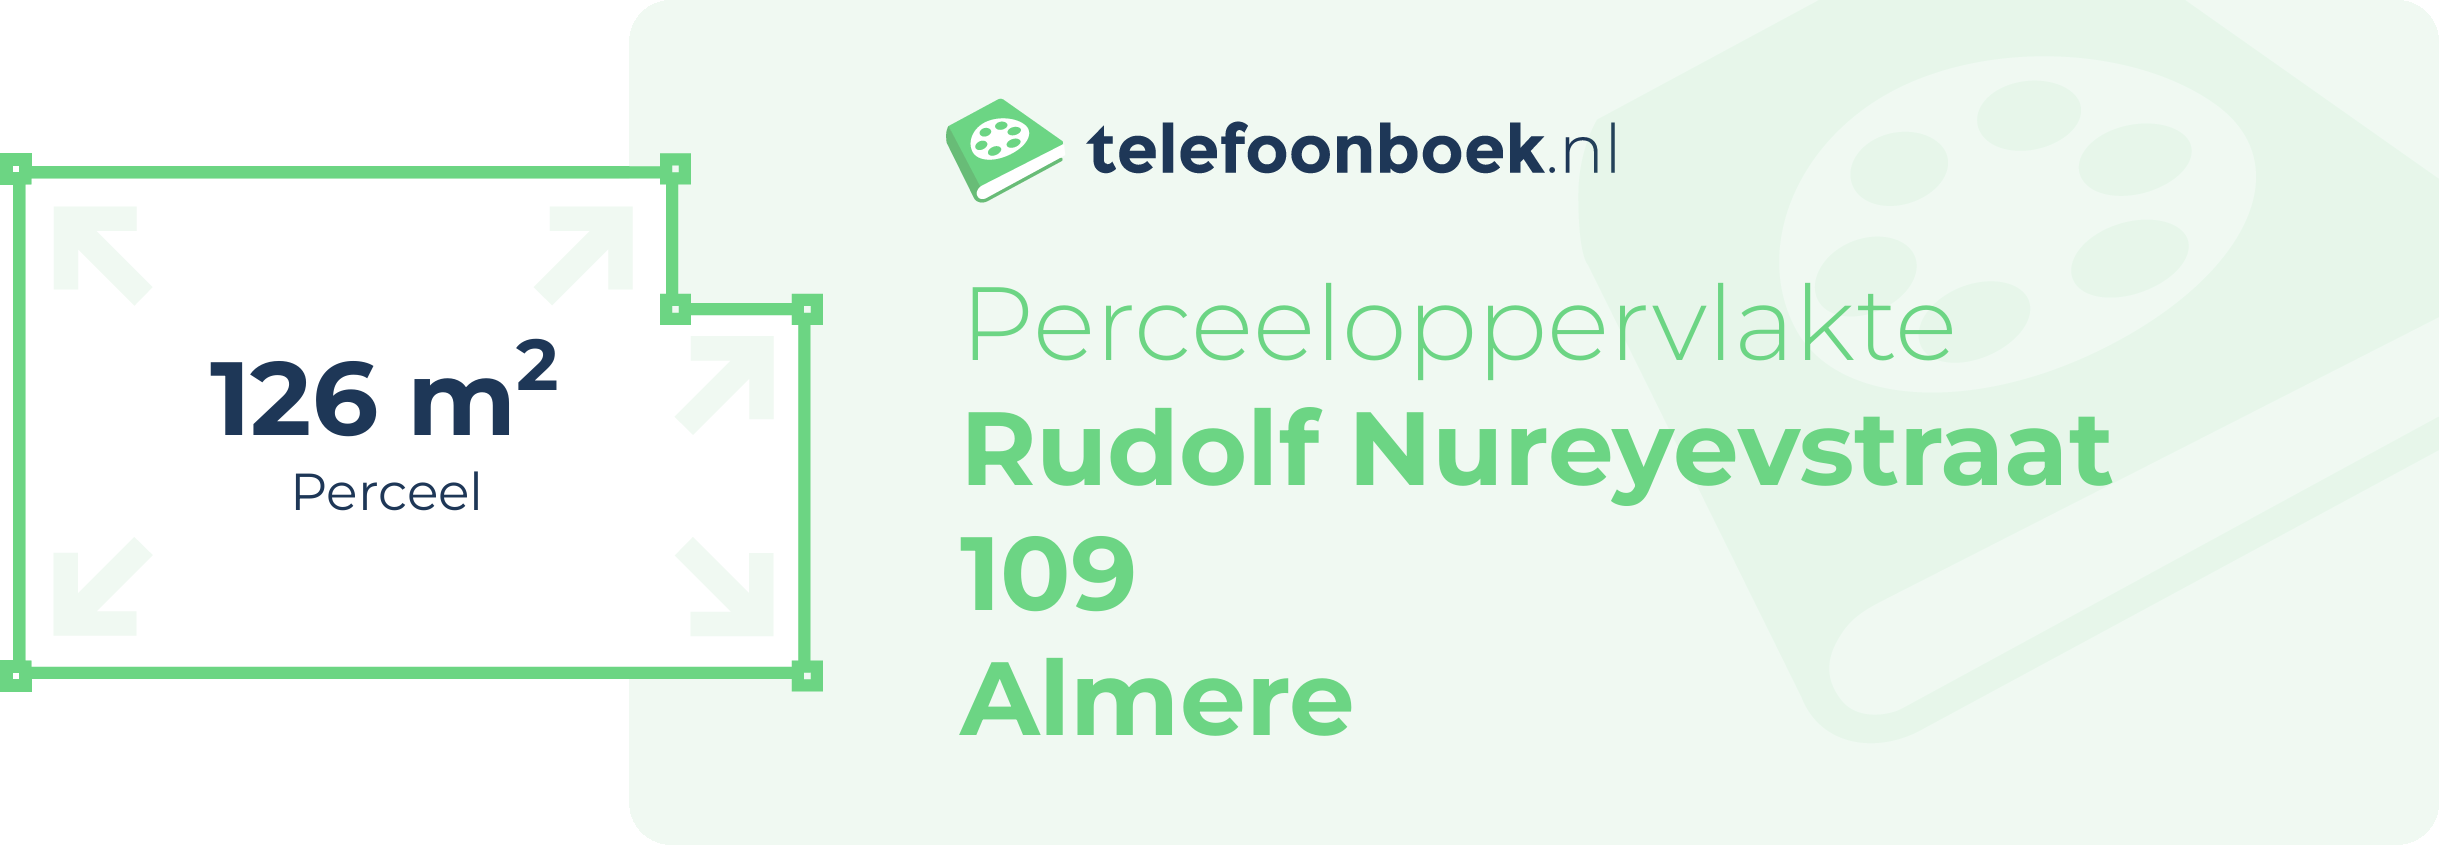 Perceeloppervlakte Rudolf Nureyevstraat 109 Almere